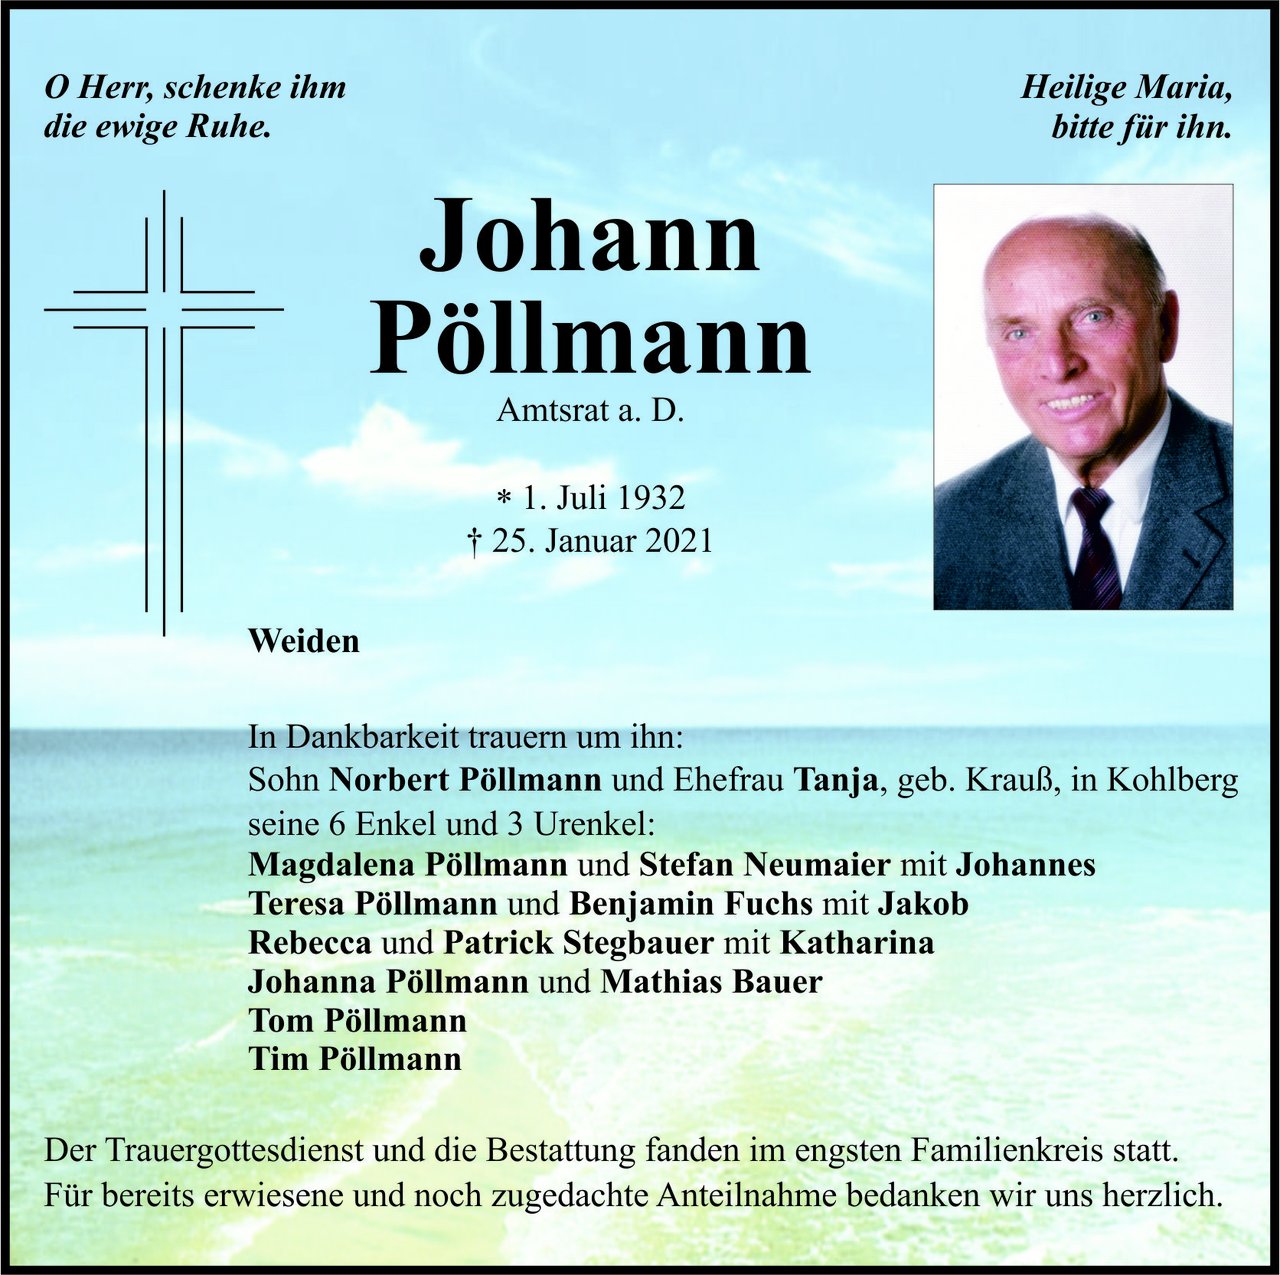 Traueranzeige Johann Pöllmann, Weiden.